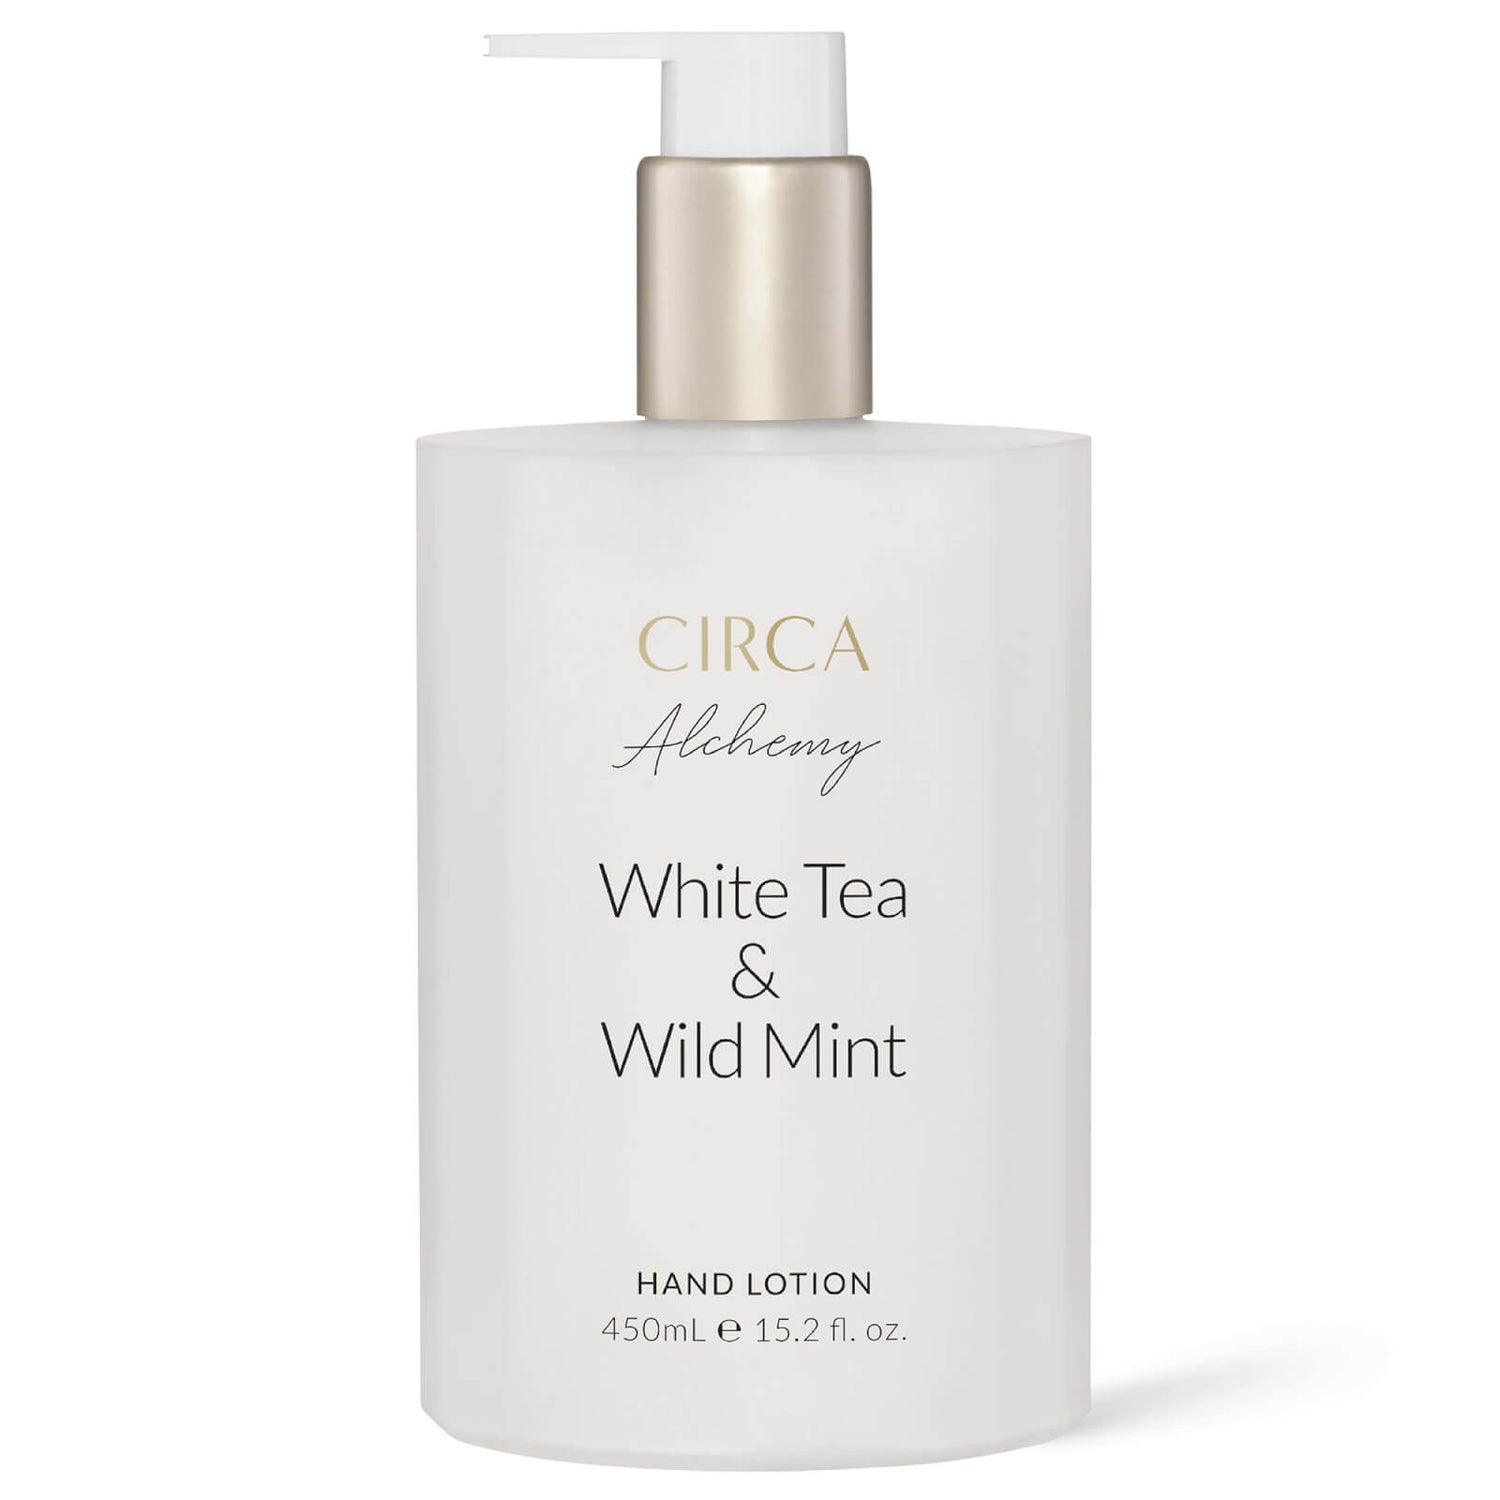 CIRCA Alchemy White Tea and Wild Mint Hand Lotion 450ml